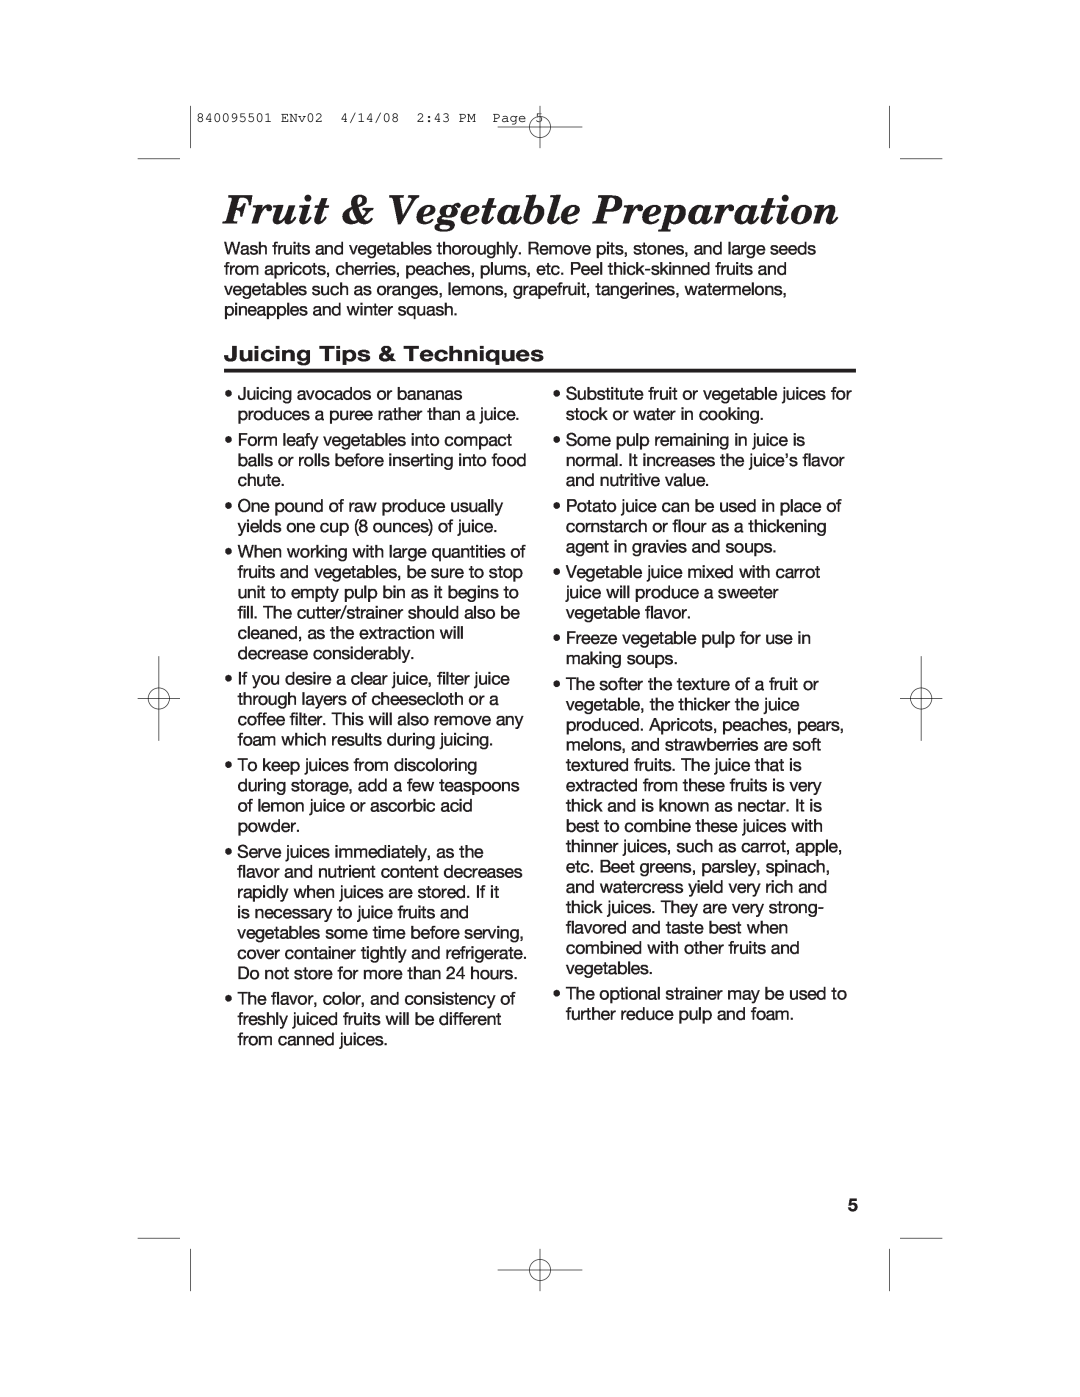 Hamilton Beach 840095501 manual Fruit & Vegetable Preparation, Juicing Tips & Techniques 